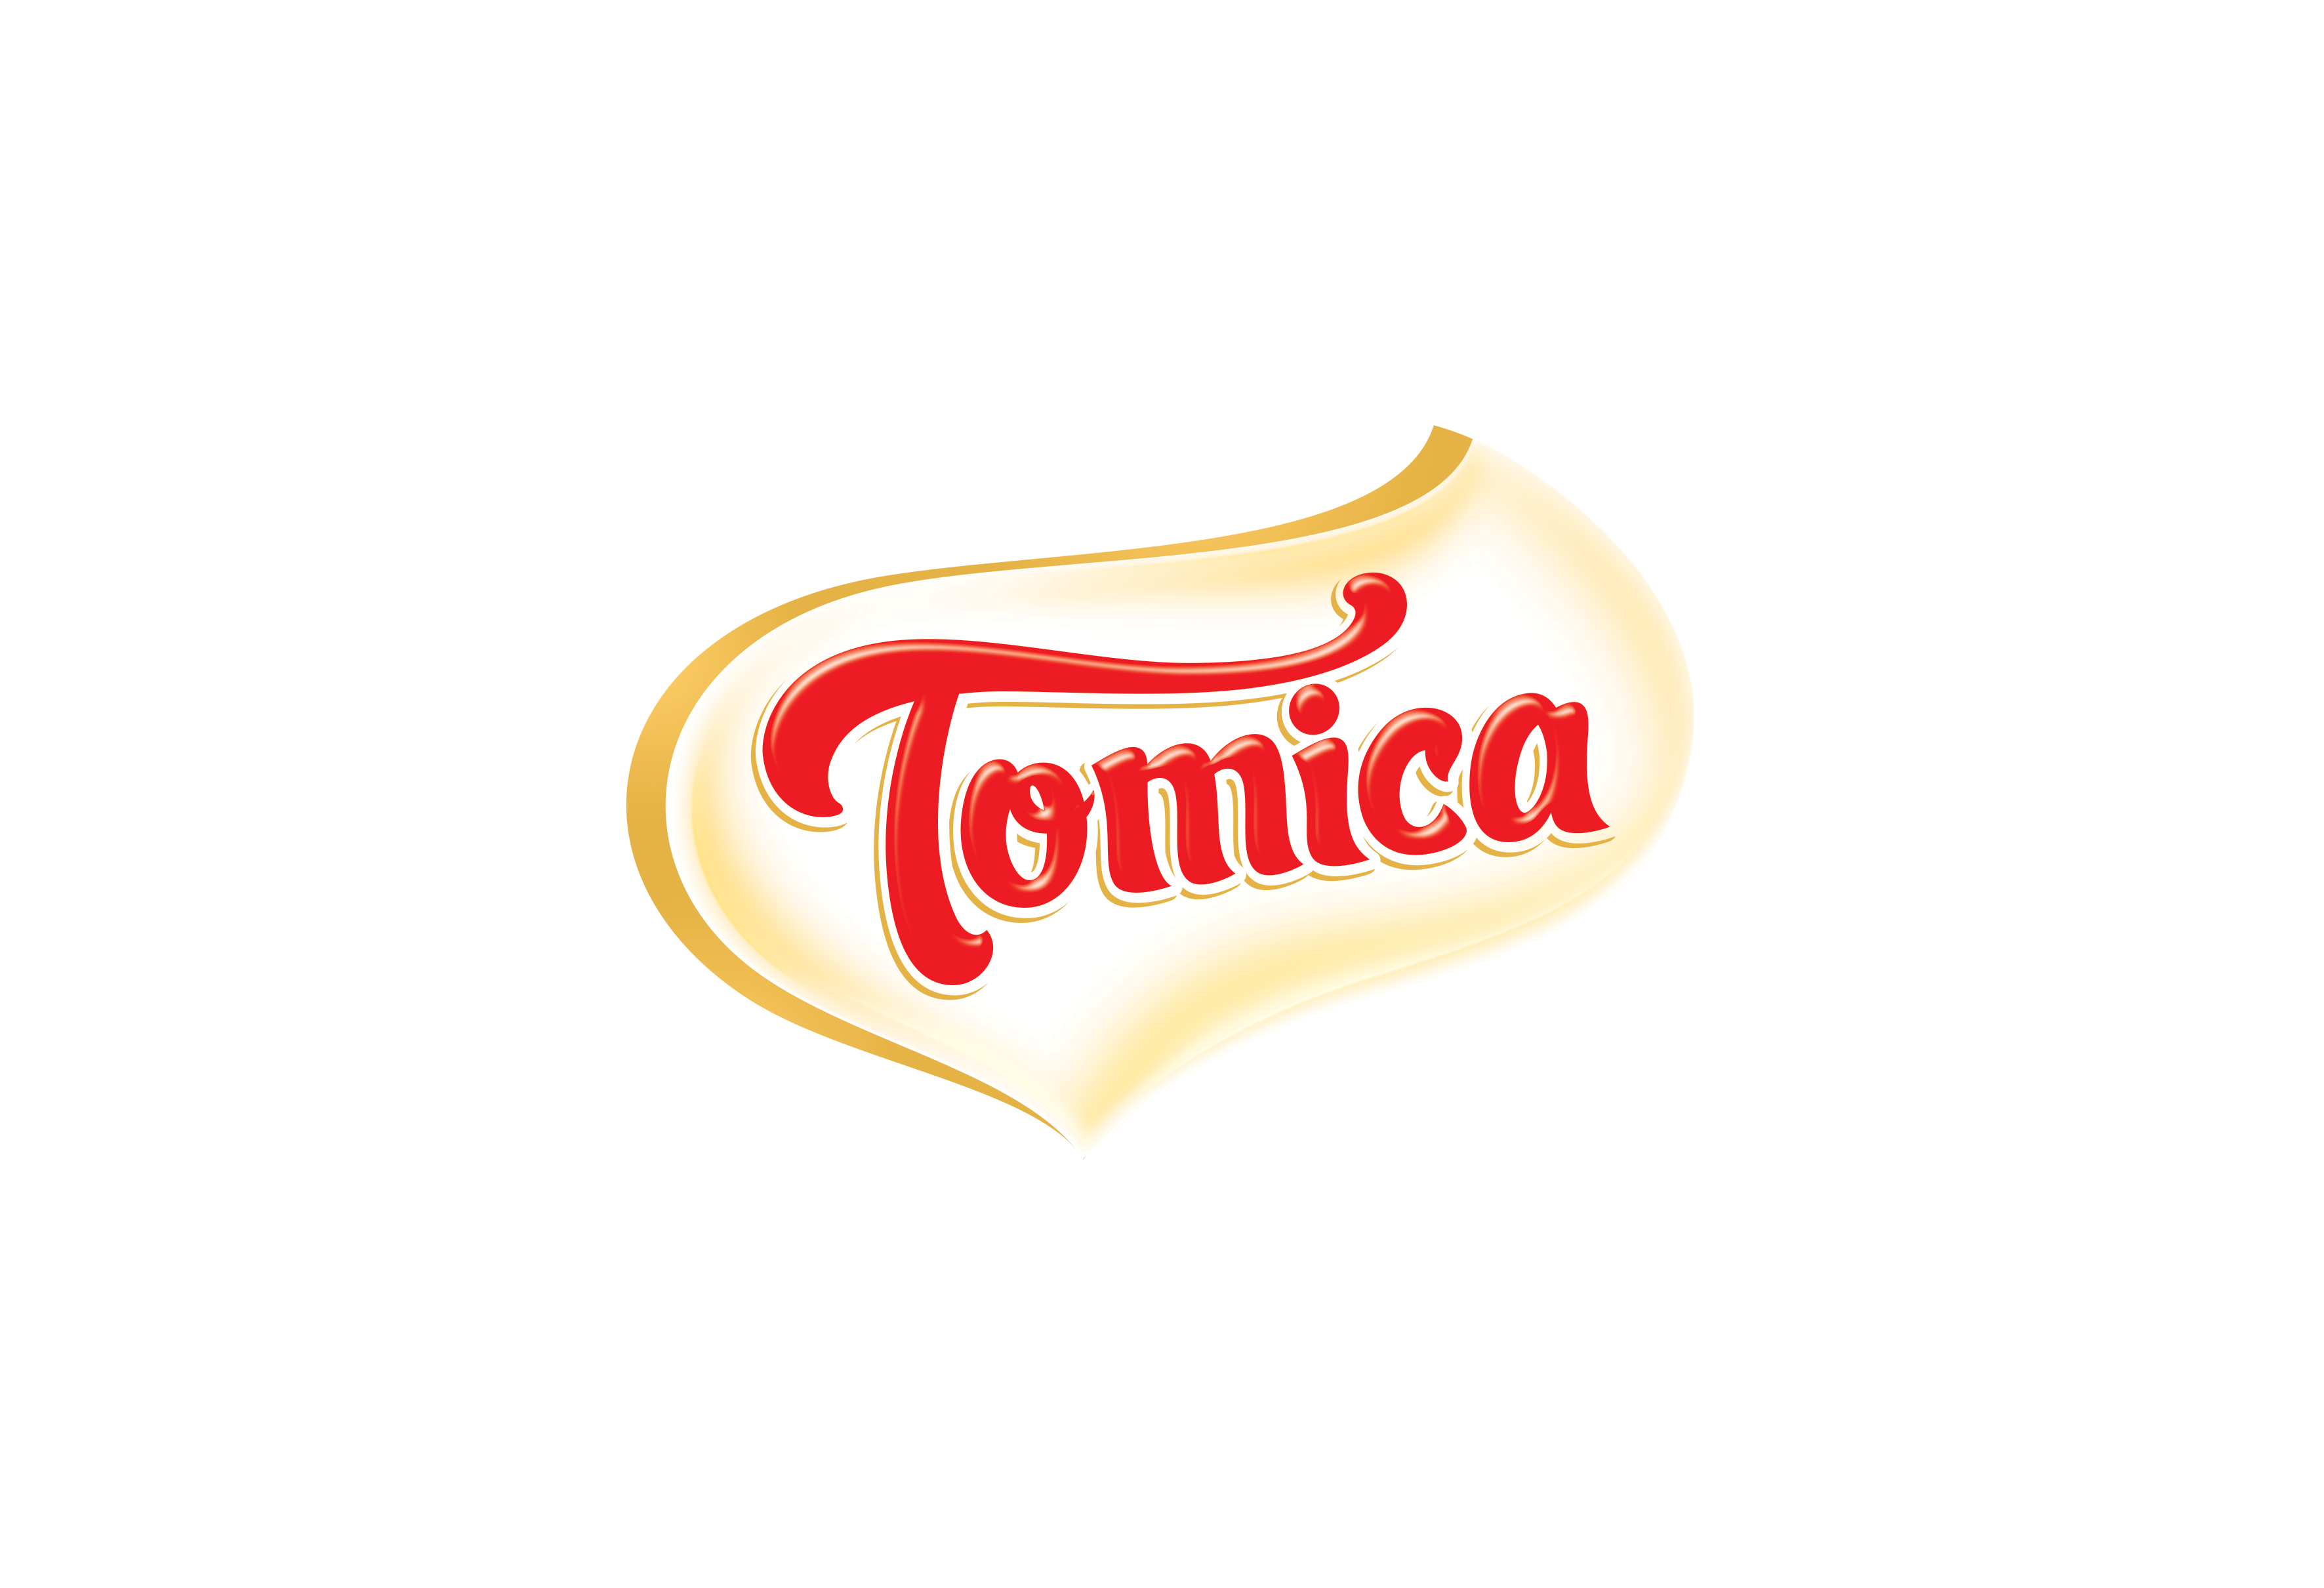 Tomica